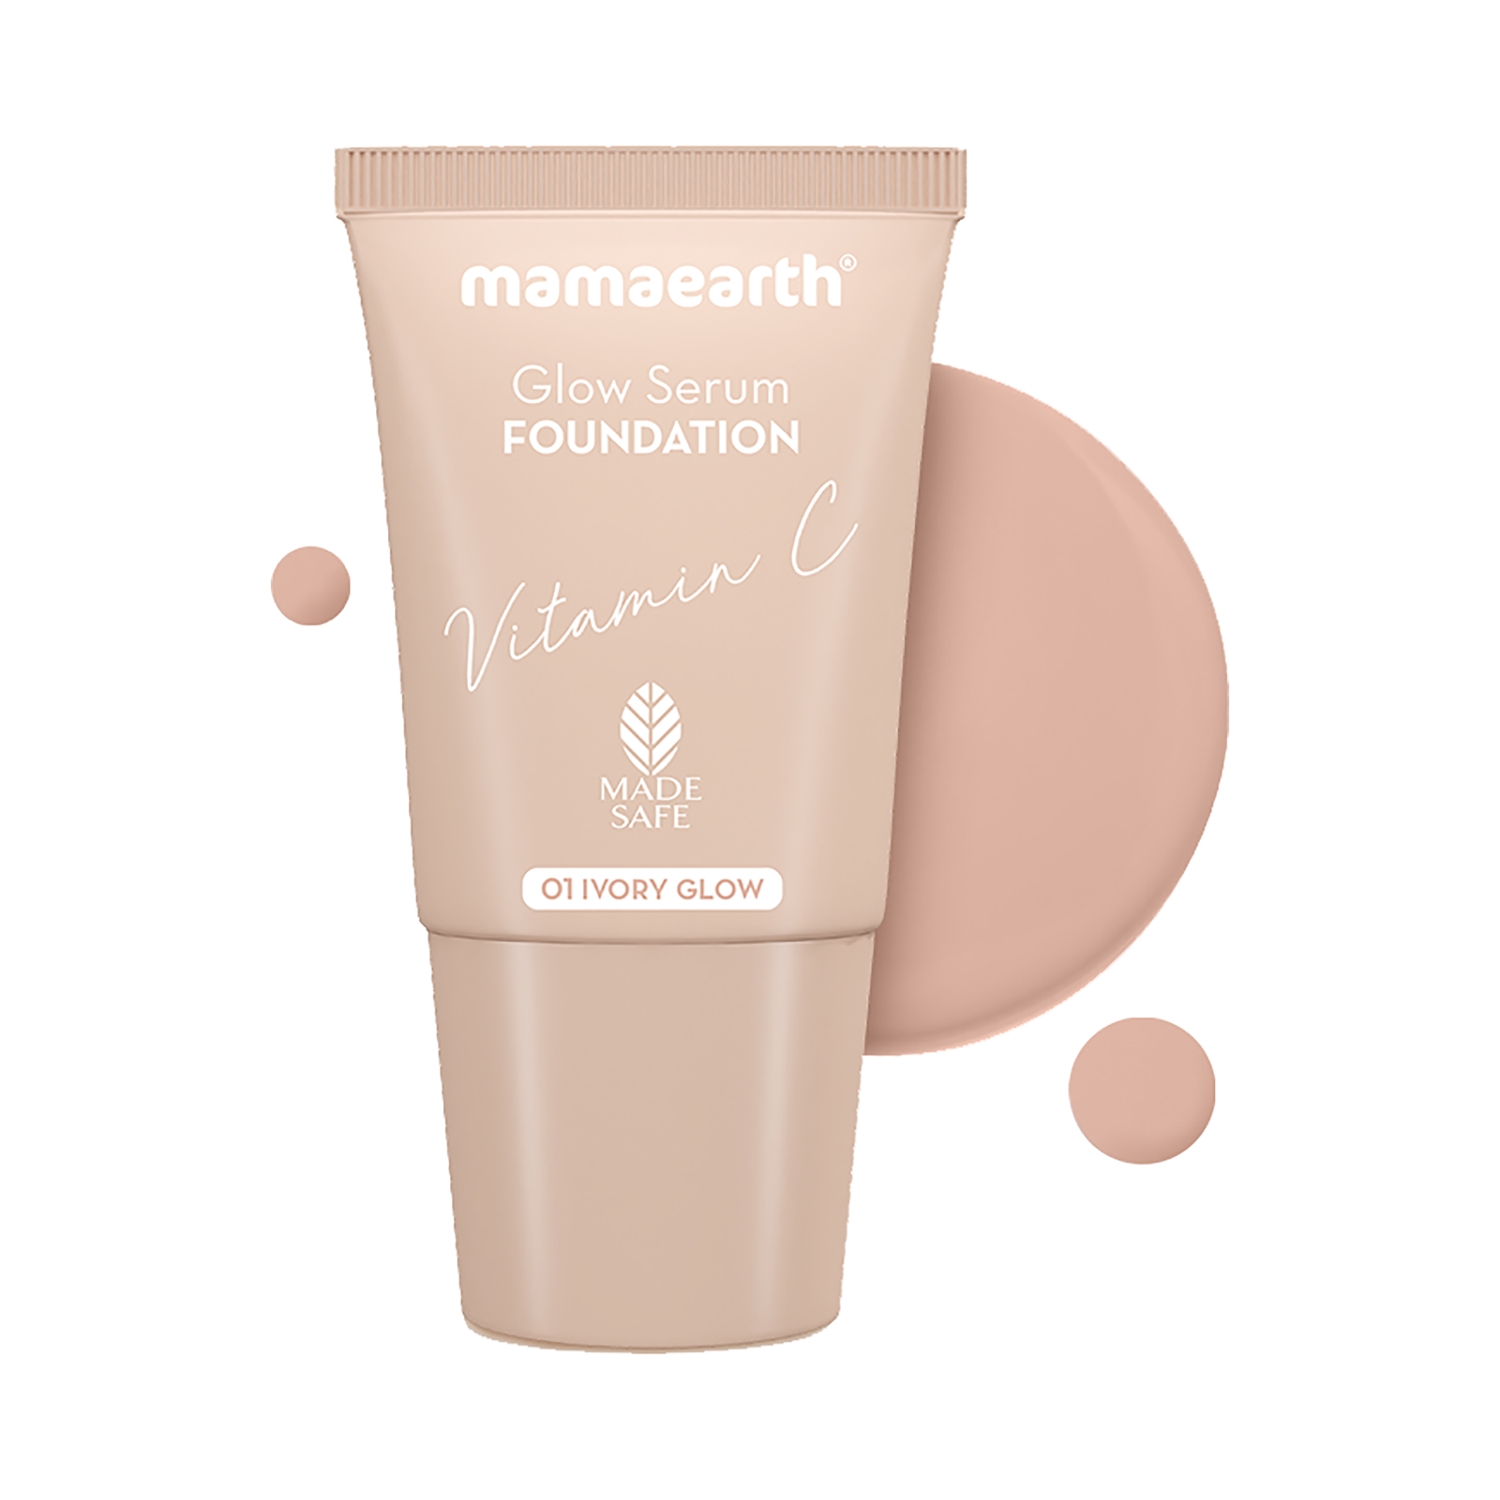 Mamaearth | Mamaearth Glow Serum Foundation Mini Tube With Vitamin C & Turmeric - 01 Ivory Glow (18ml)